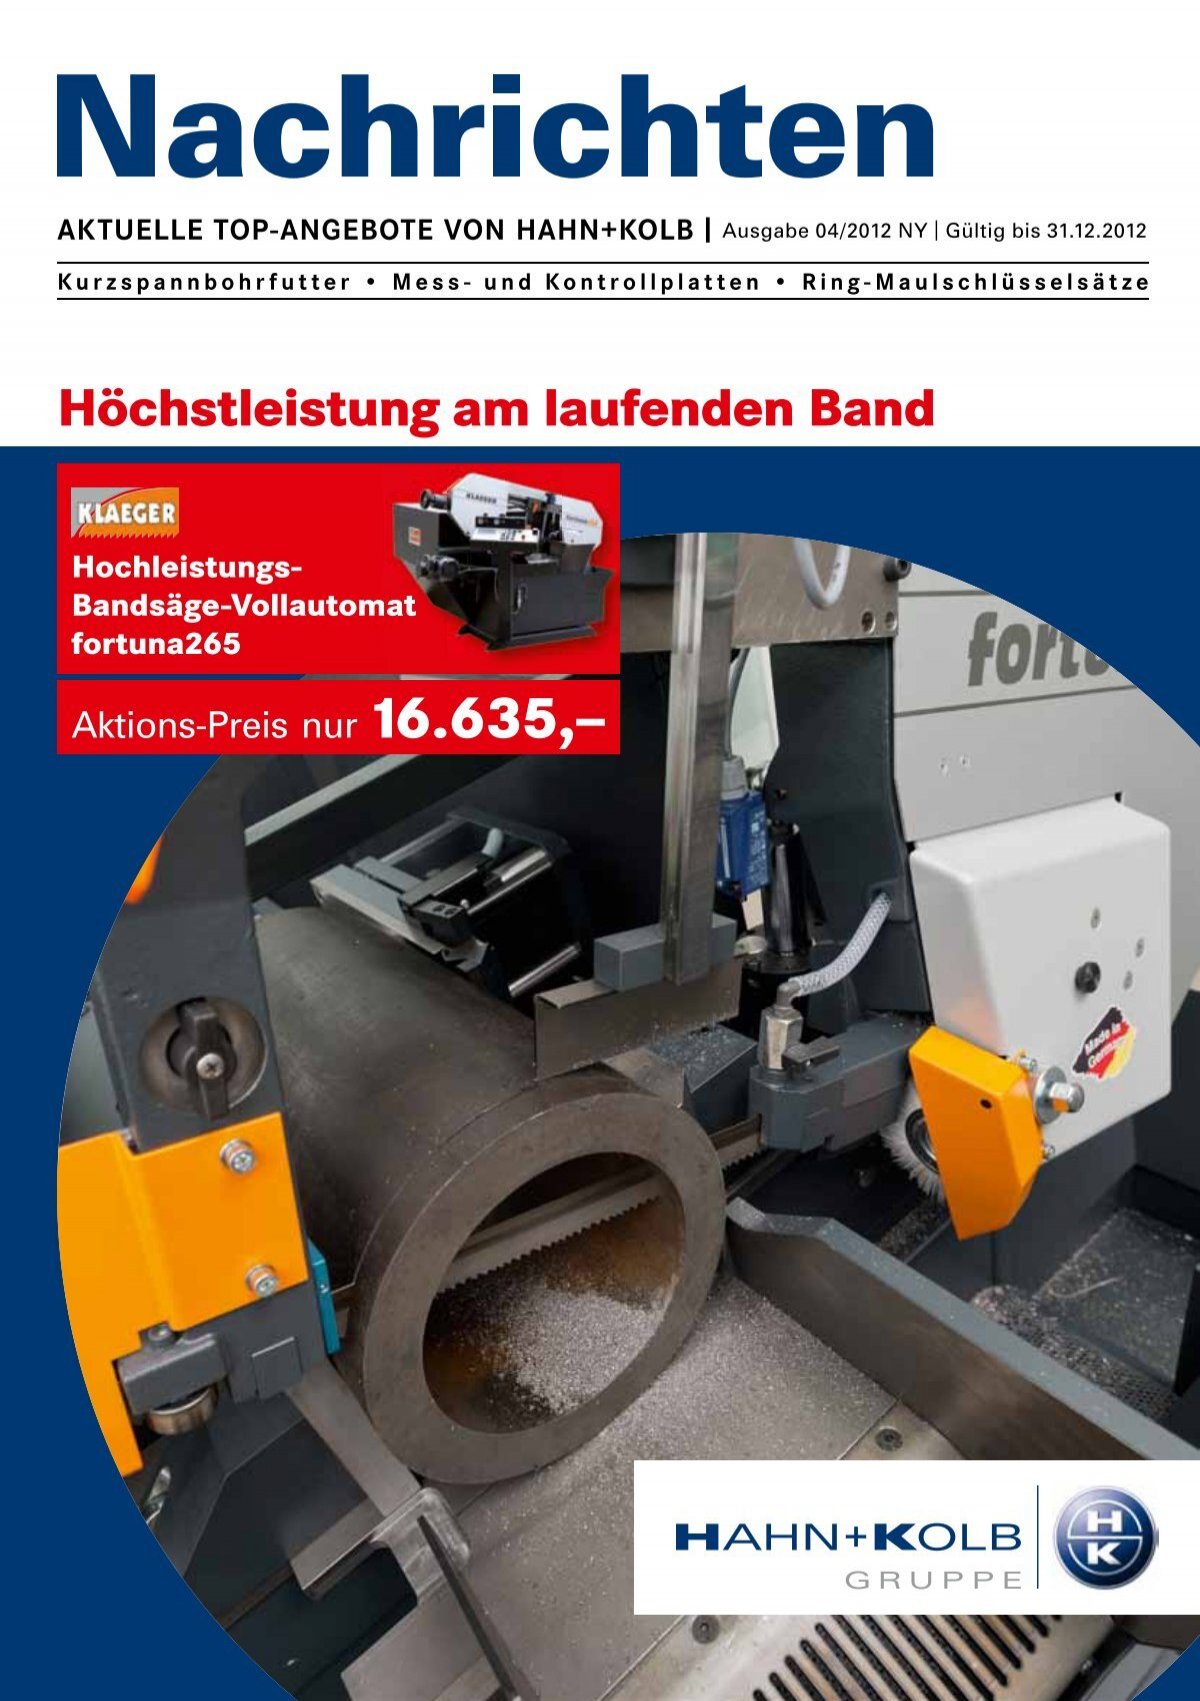 NEU - HAHN+KOLB Werkzeuge GmbH